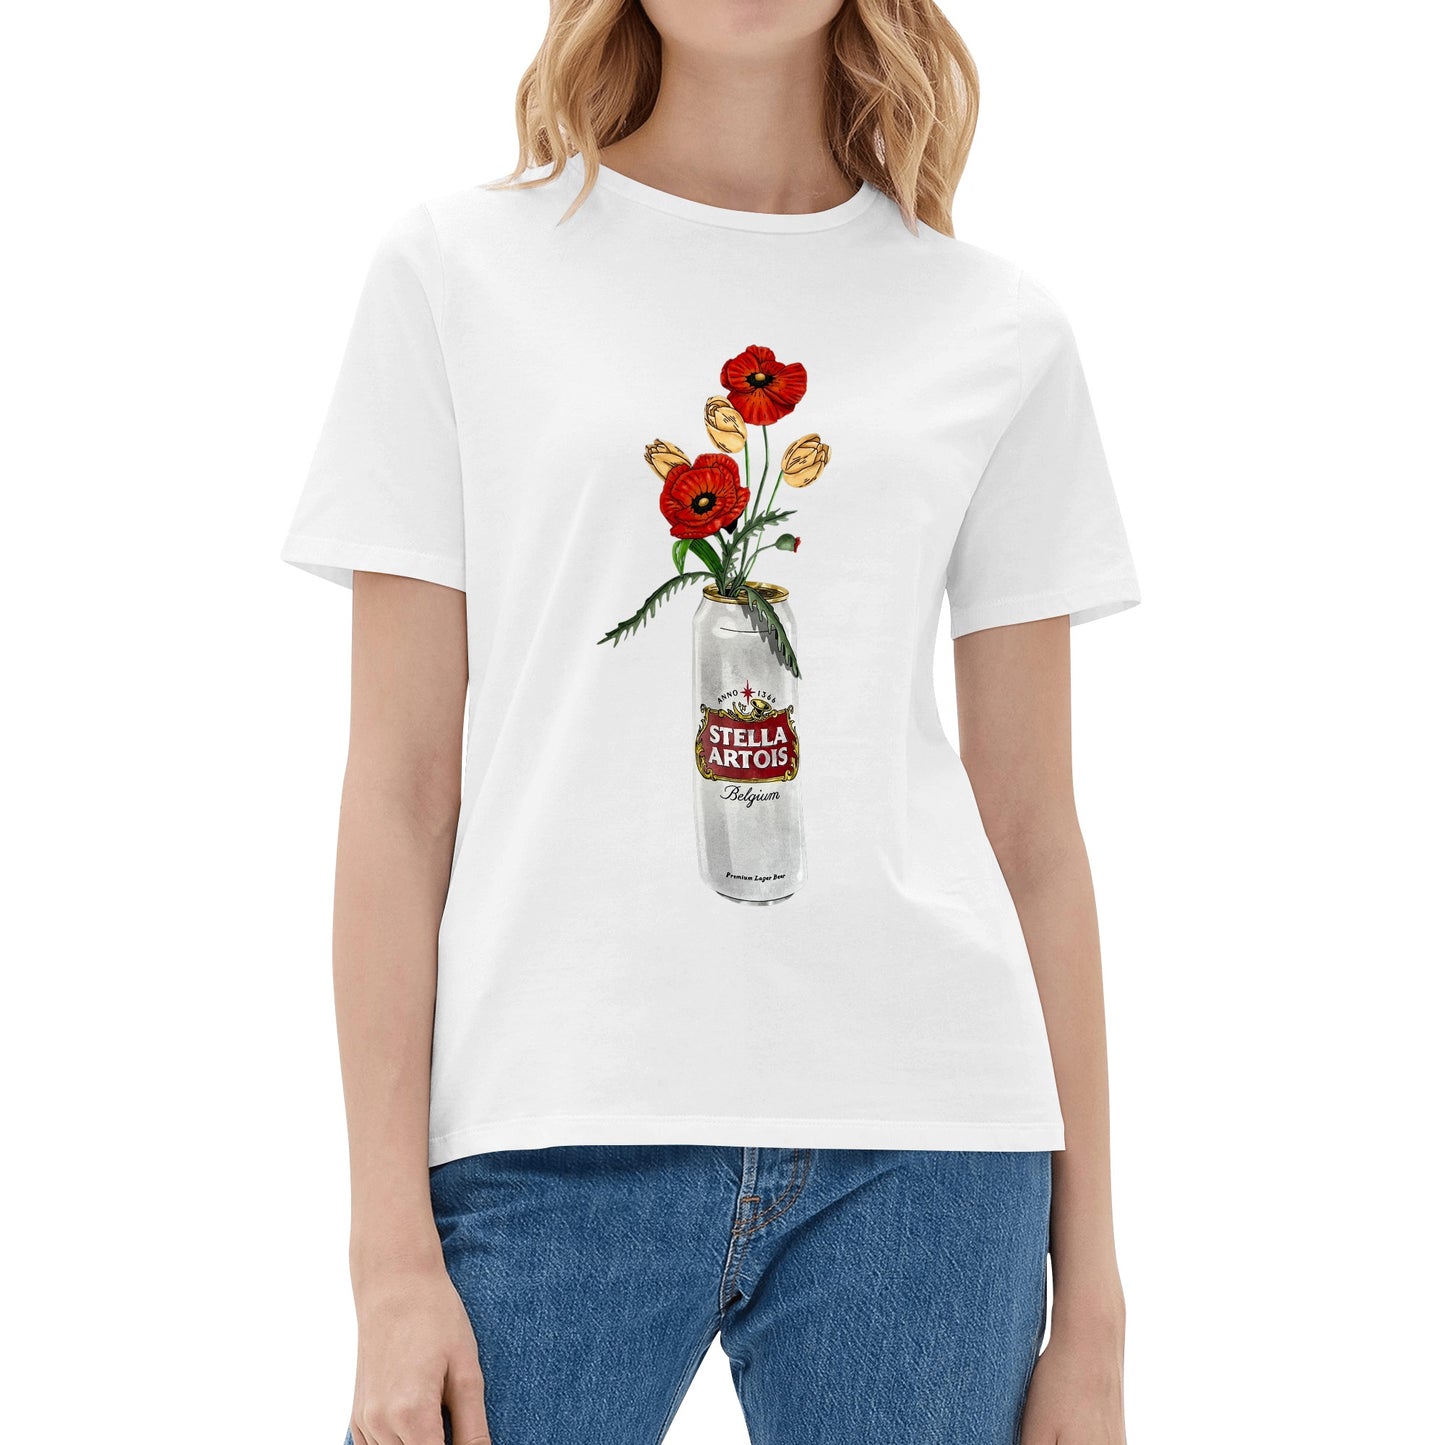 T-Shirt Estella Artois floral art DrinkandArt